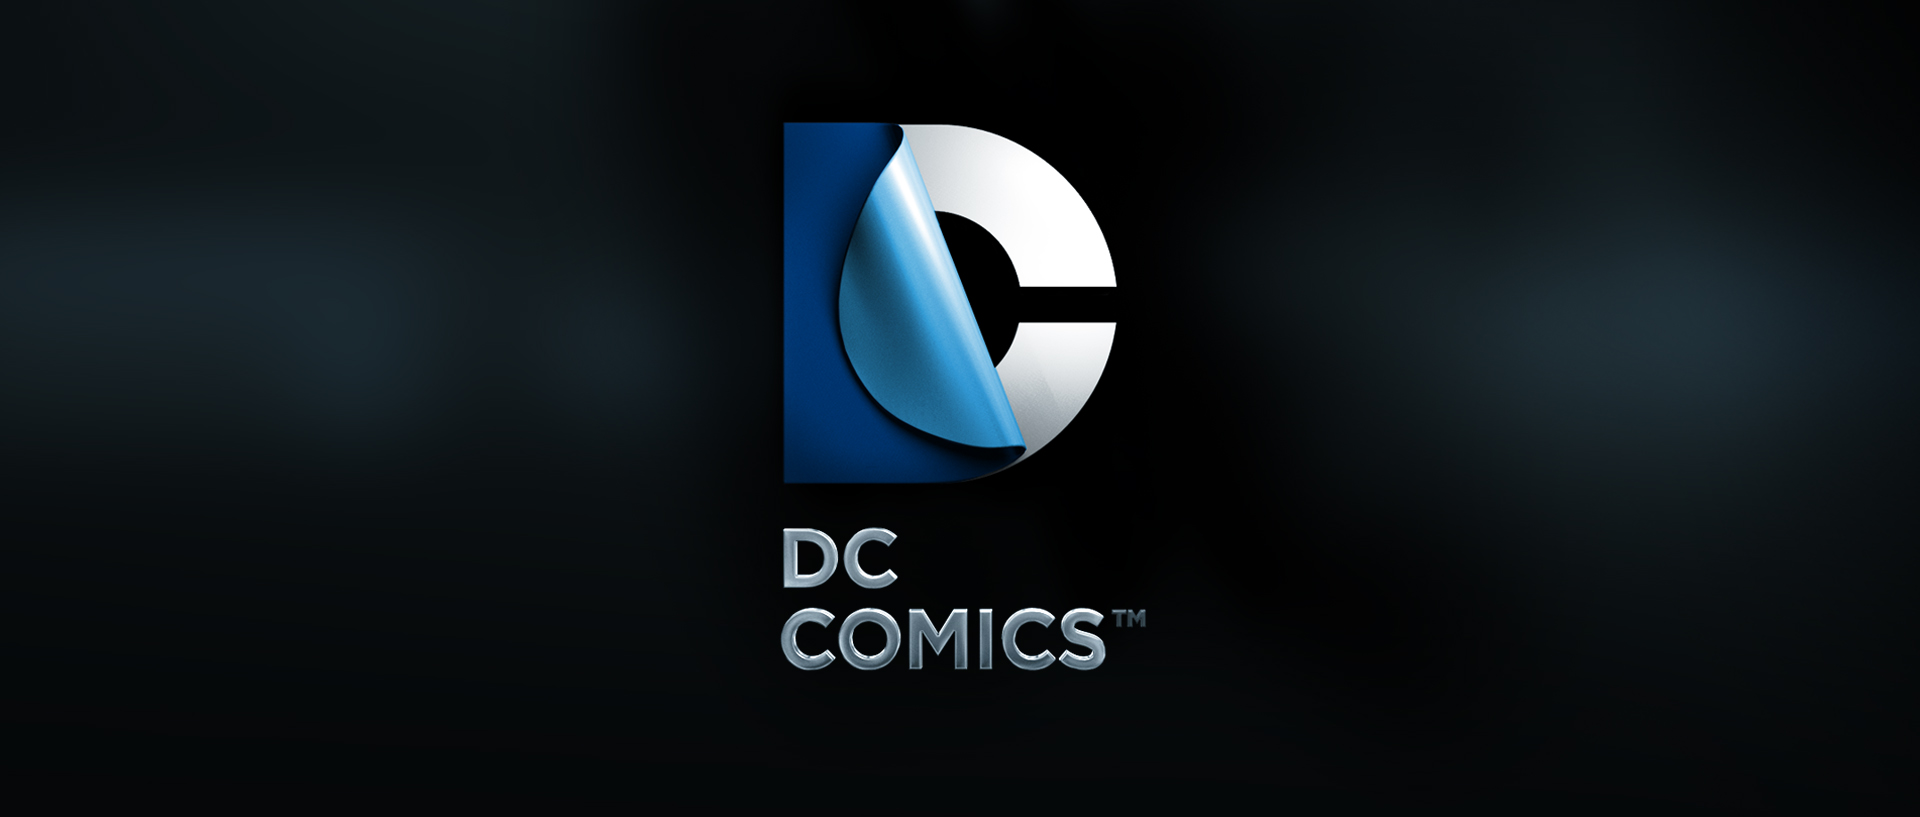 dc comics logo cinema